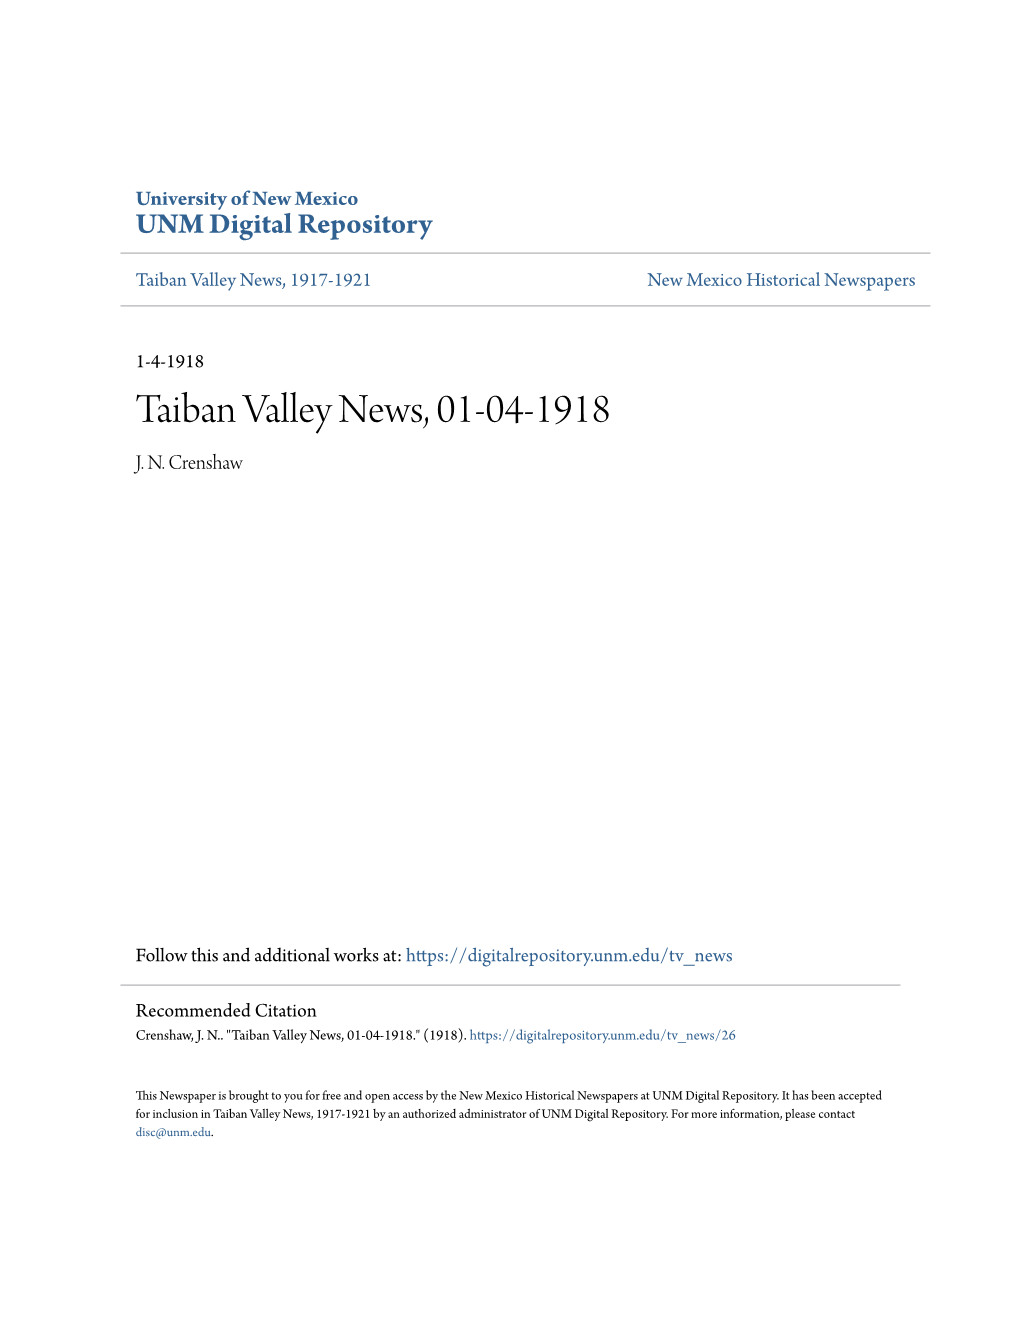 Taiban Valley News, 01-04-1918 J